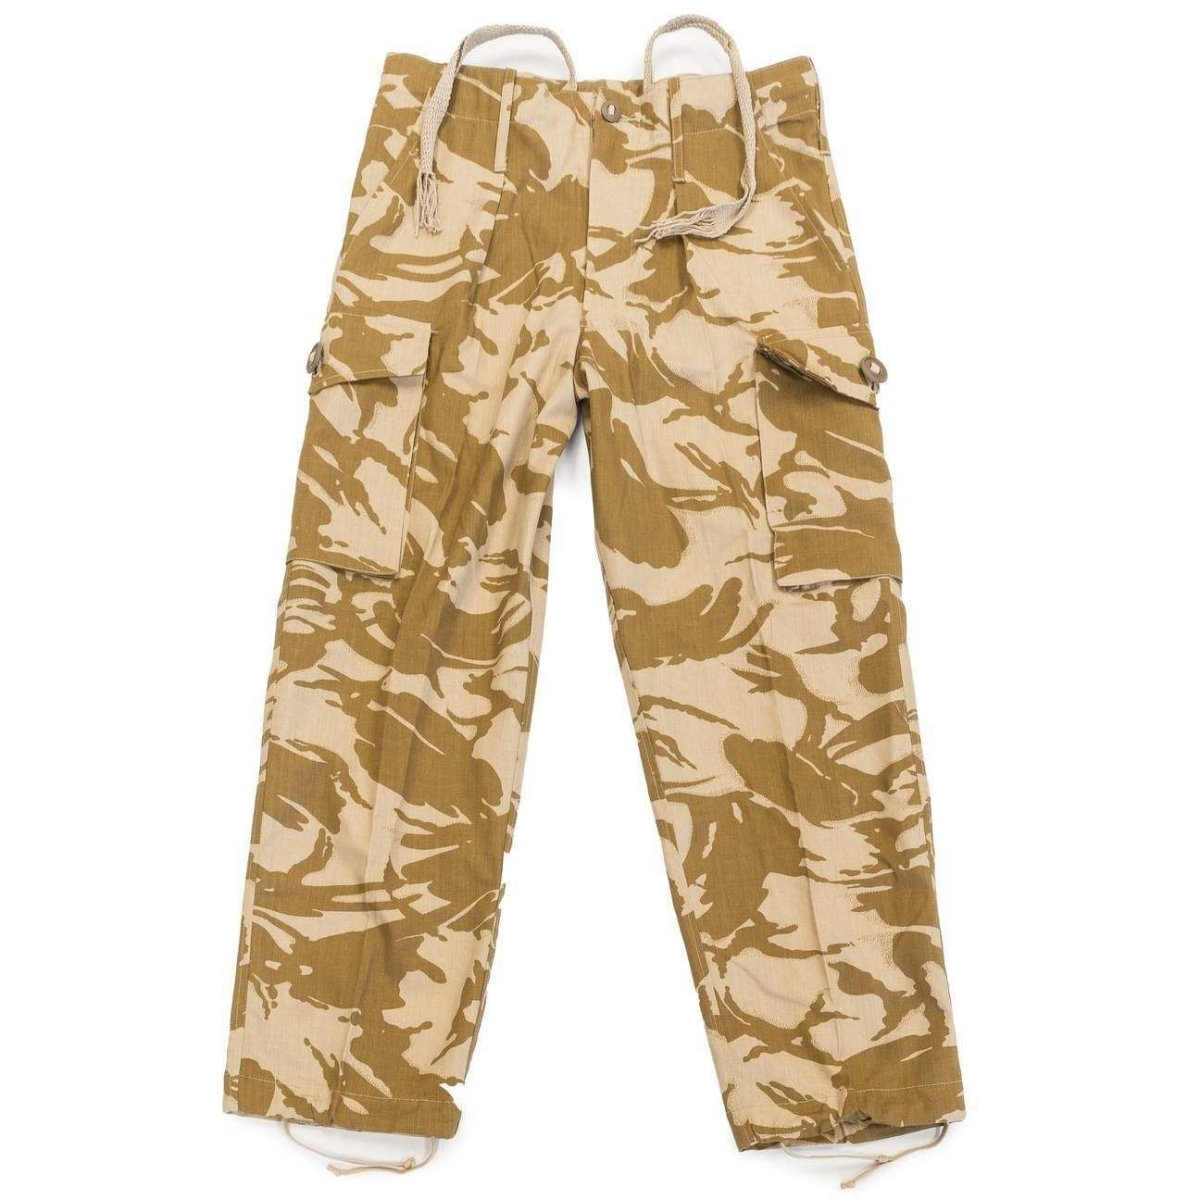 genuine british army combat trousers desert military pants 95 lightweight new 390258